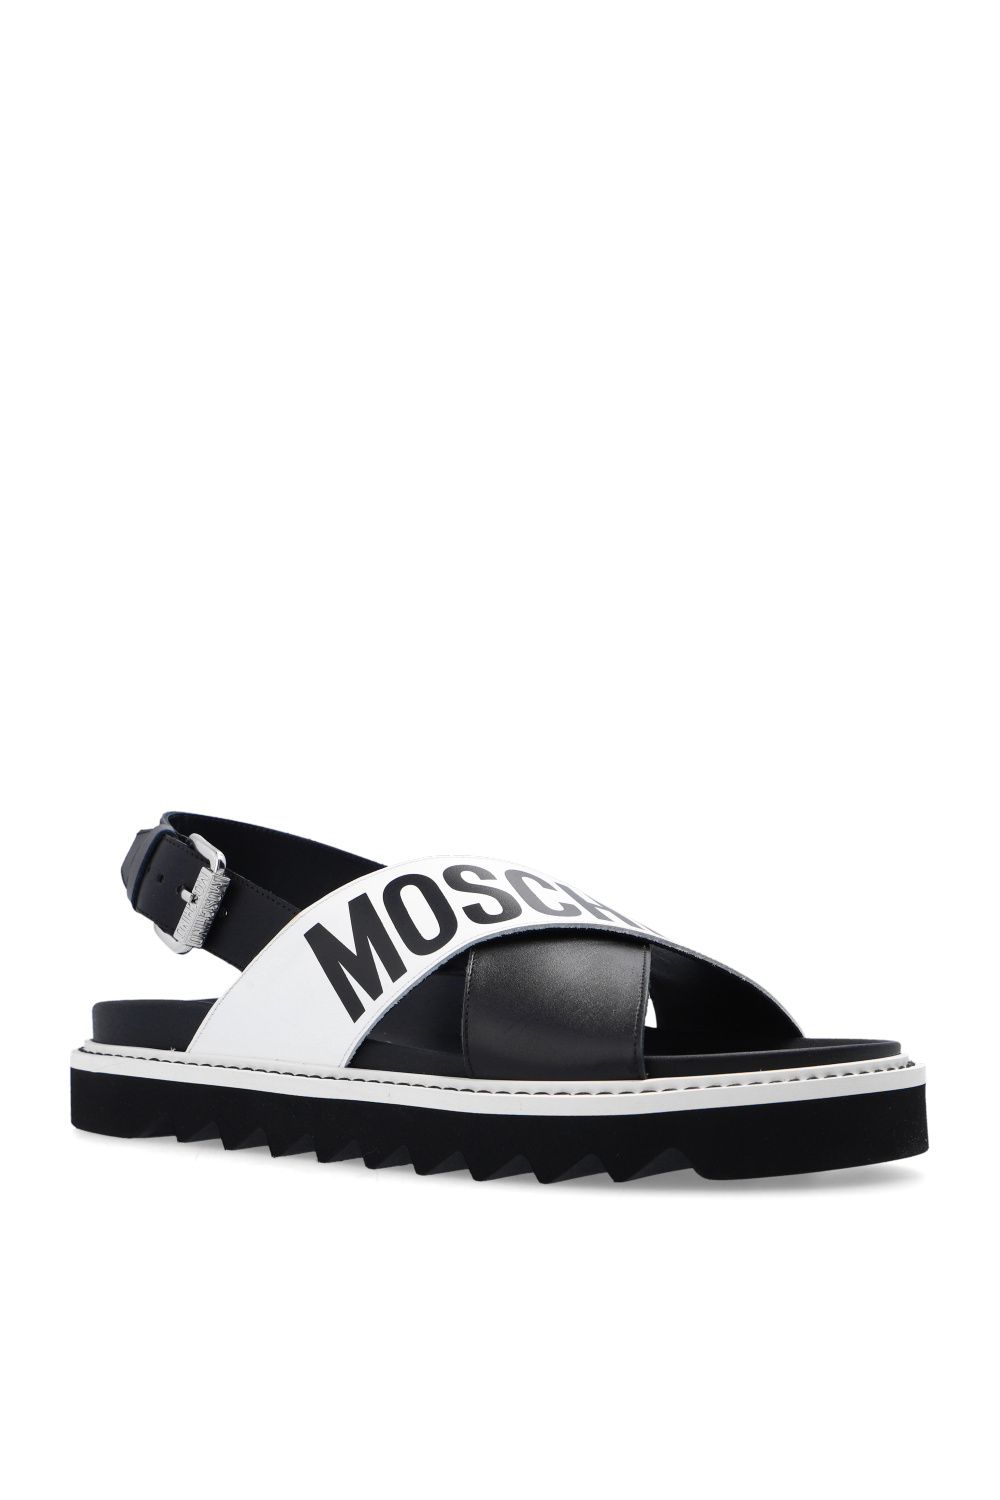 Moschino tila march cala block heel sandals item